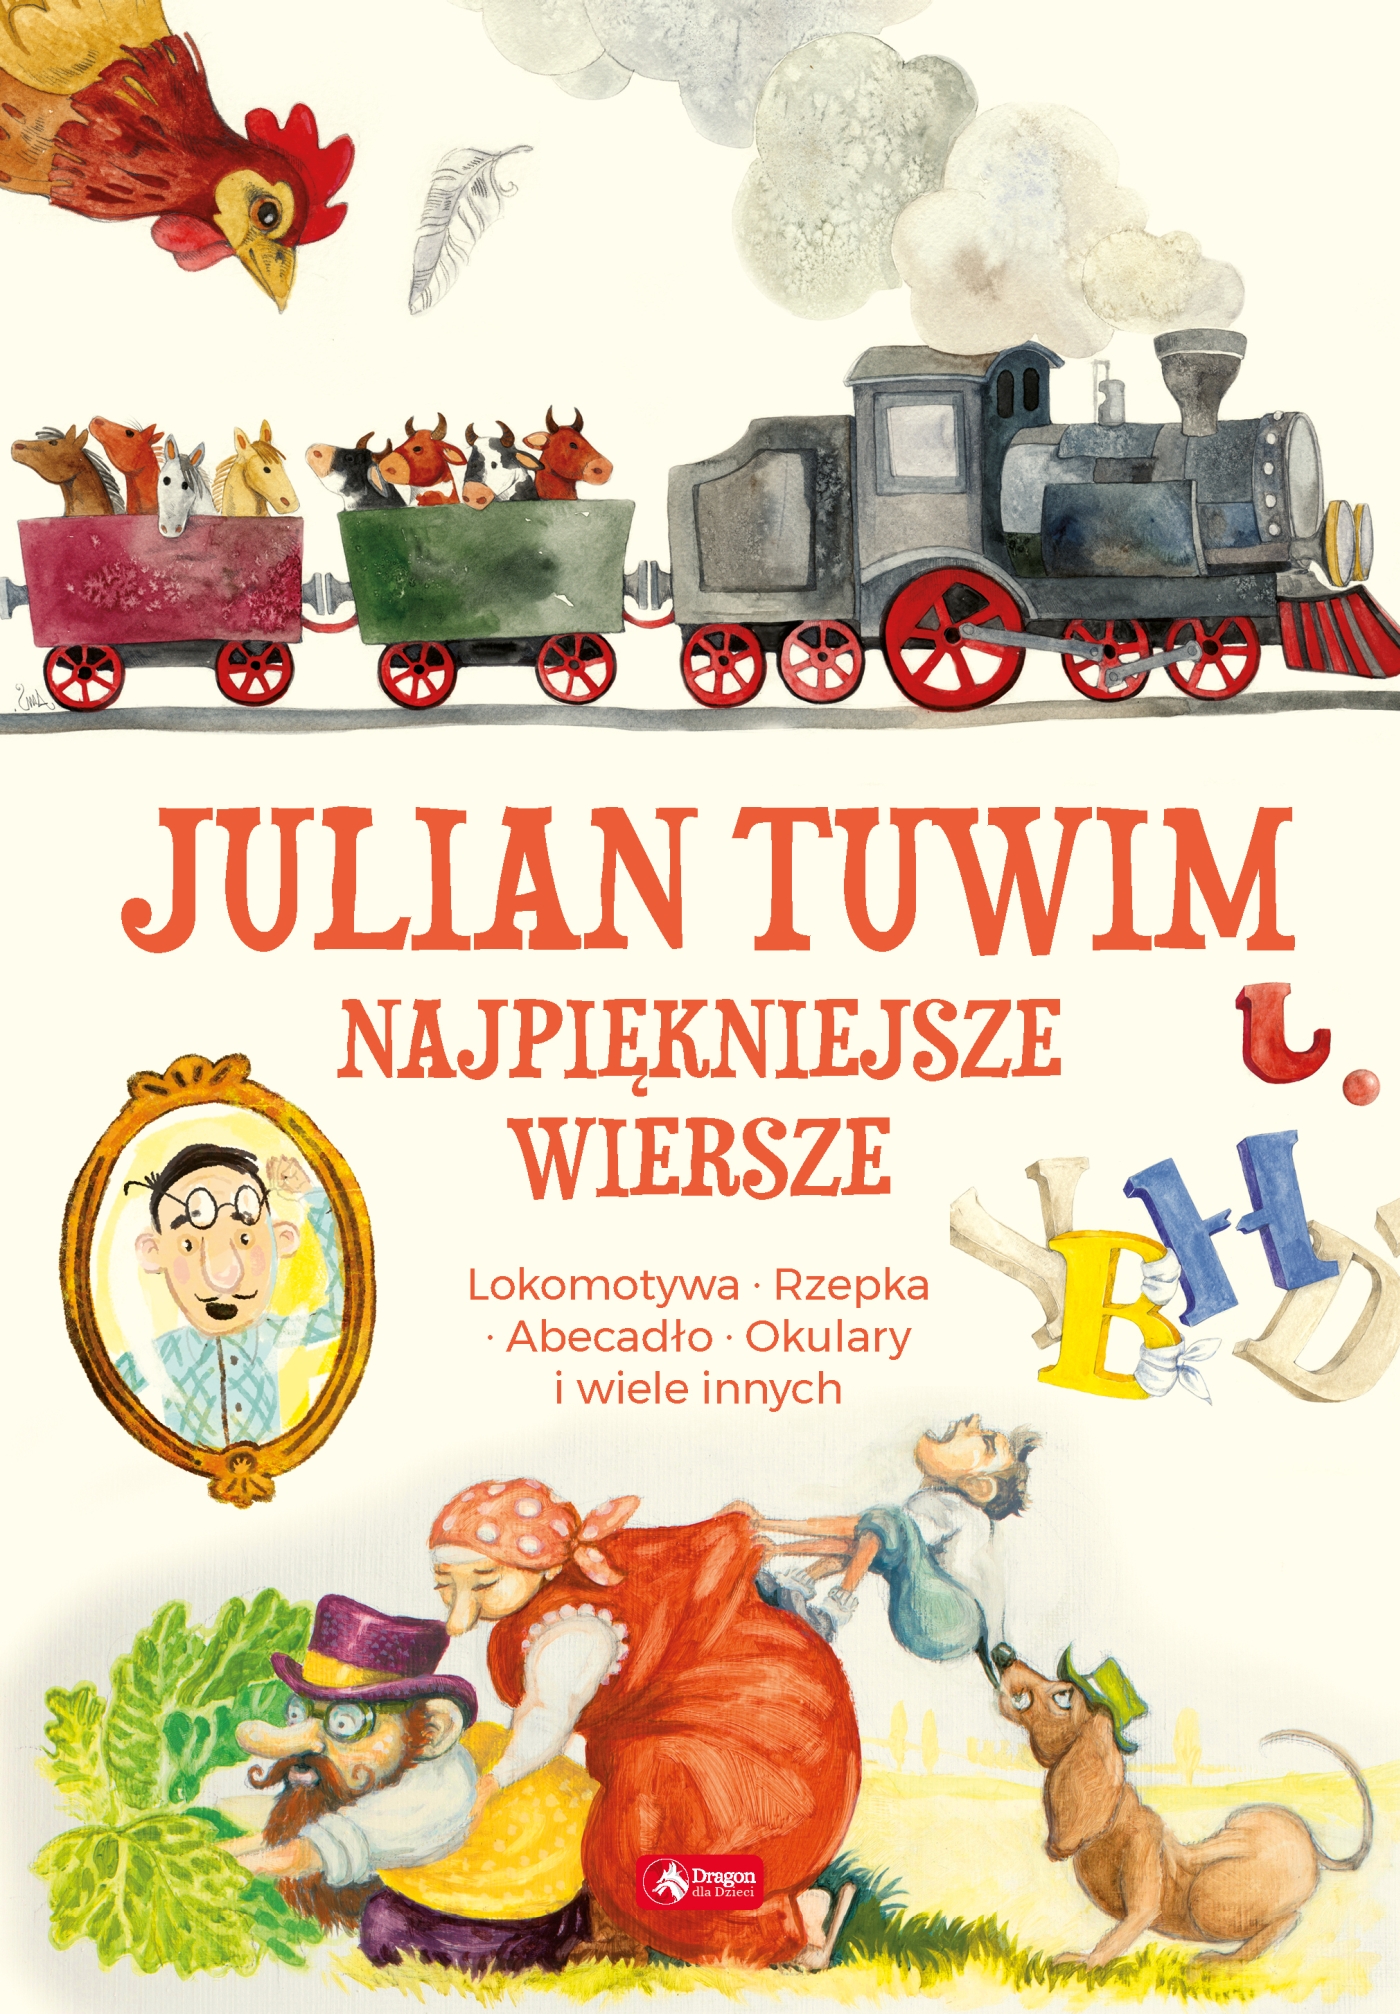 Julian Tuwim Oczy Mi Zamkniesz JULIAN TUWIM WIERSZE - Julian Tuwim | Multiszop.pl